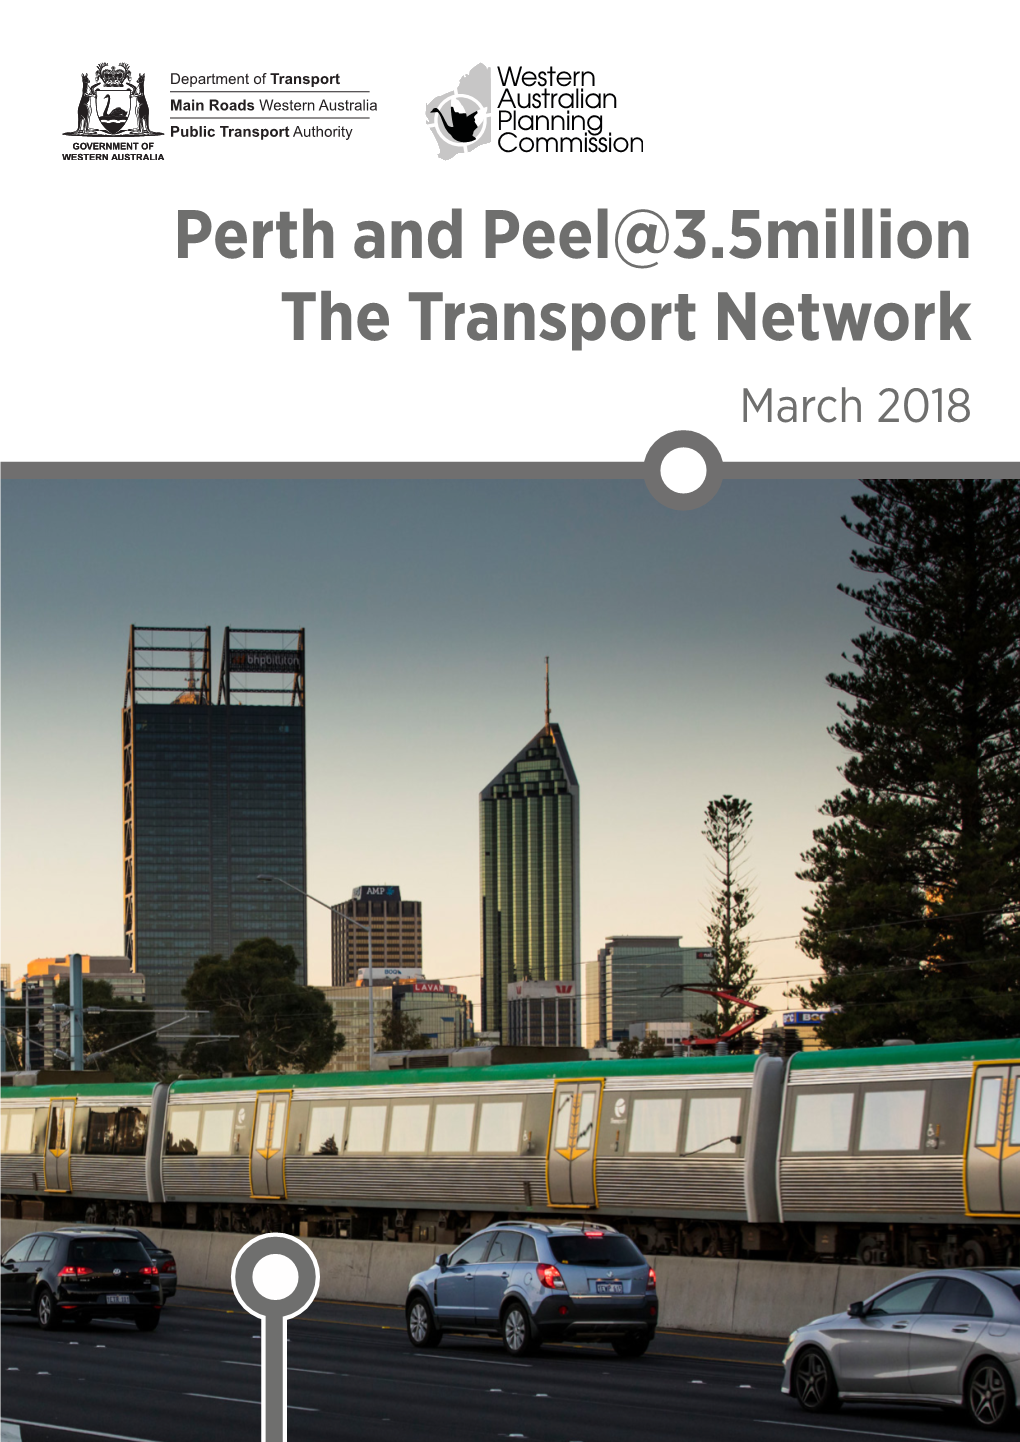 Perth and Peel @ 3.5 Million